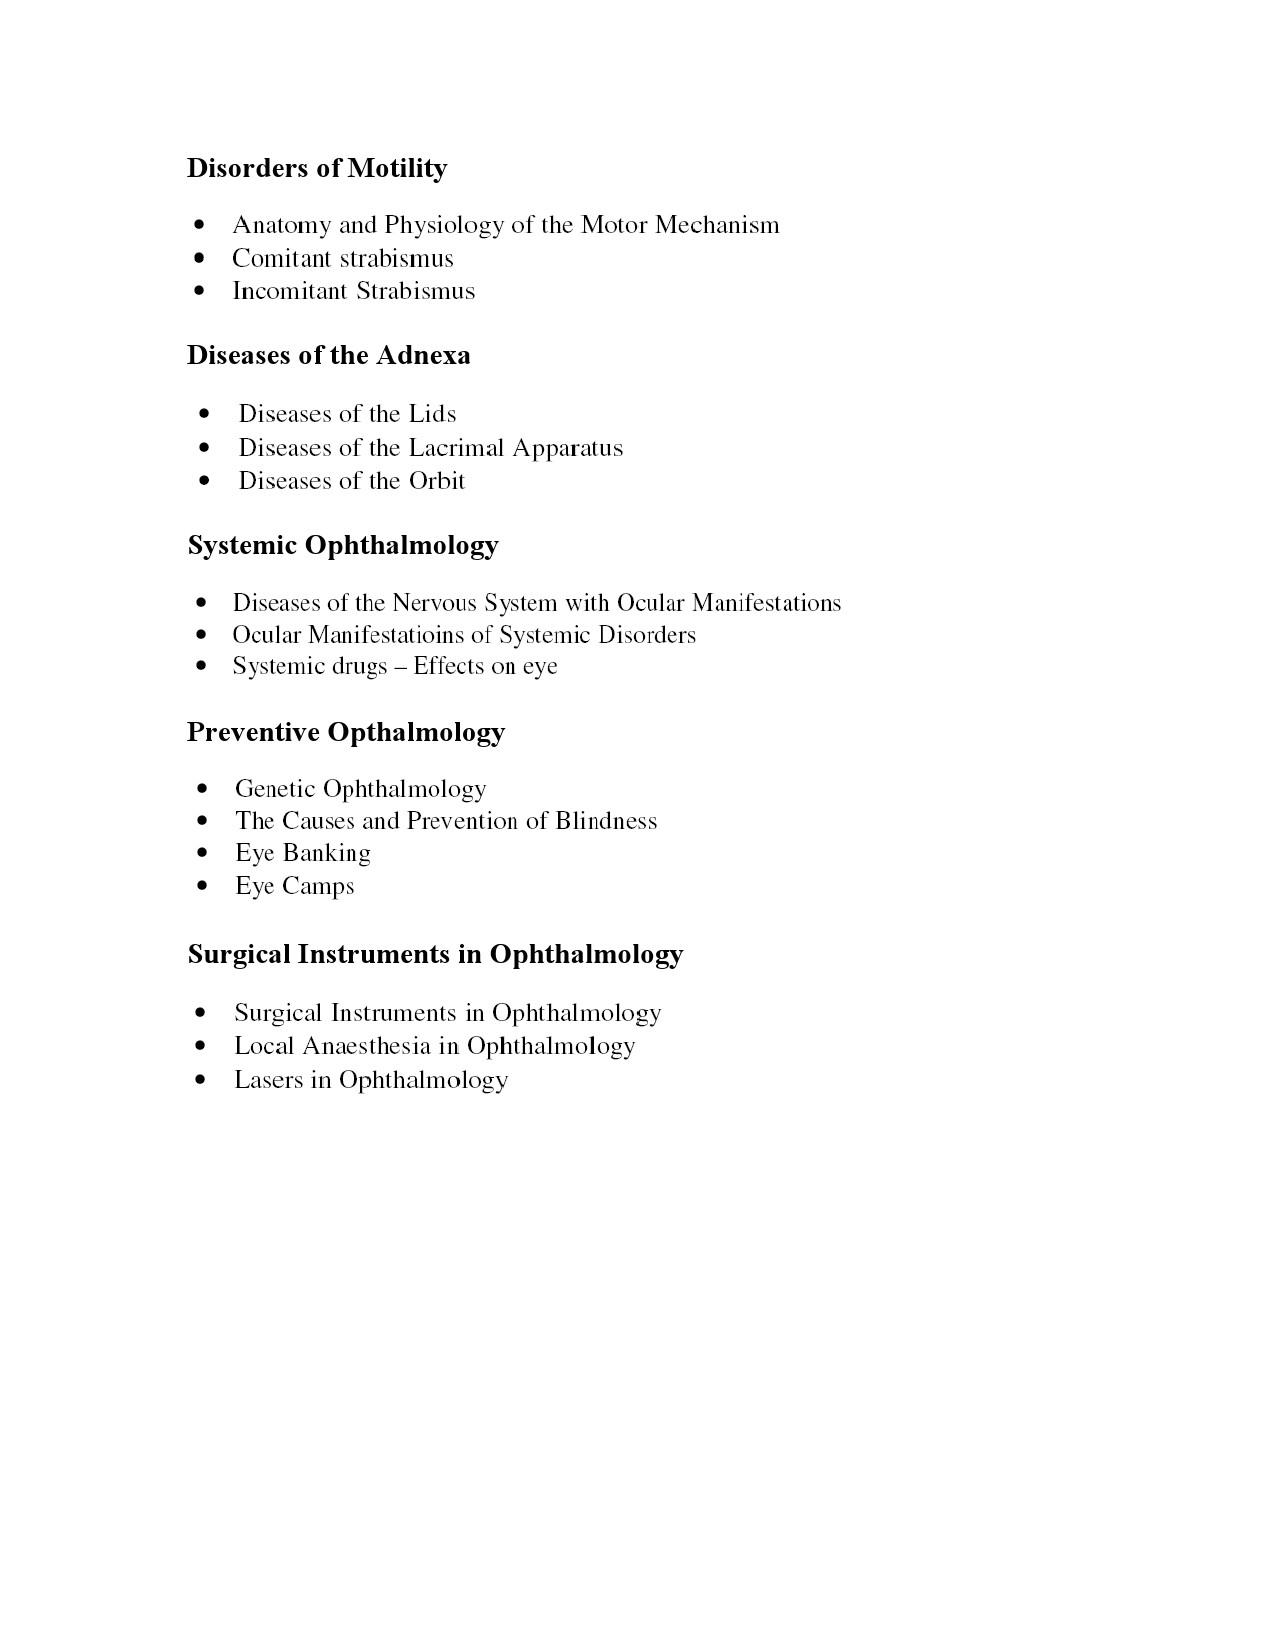 MS Level Syllabus Ophthalmology - Notification Image 2